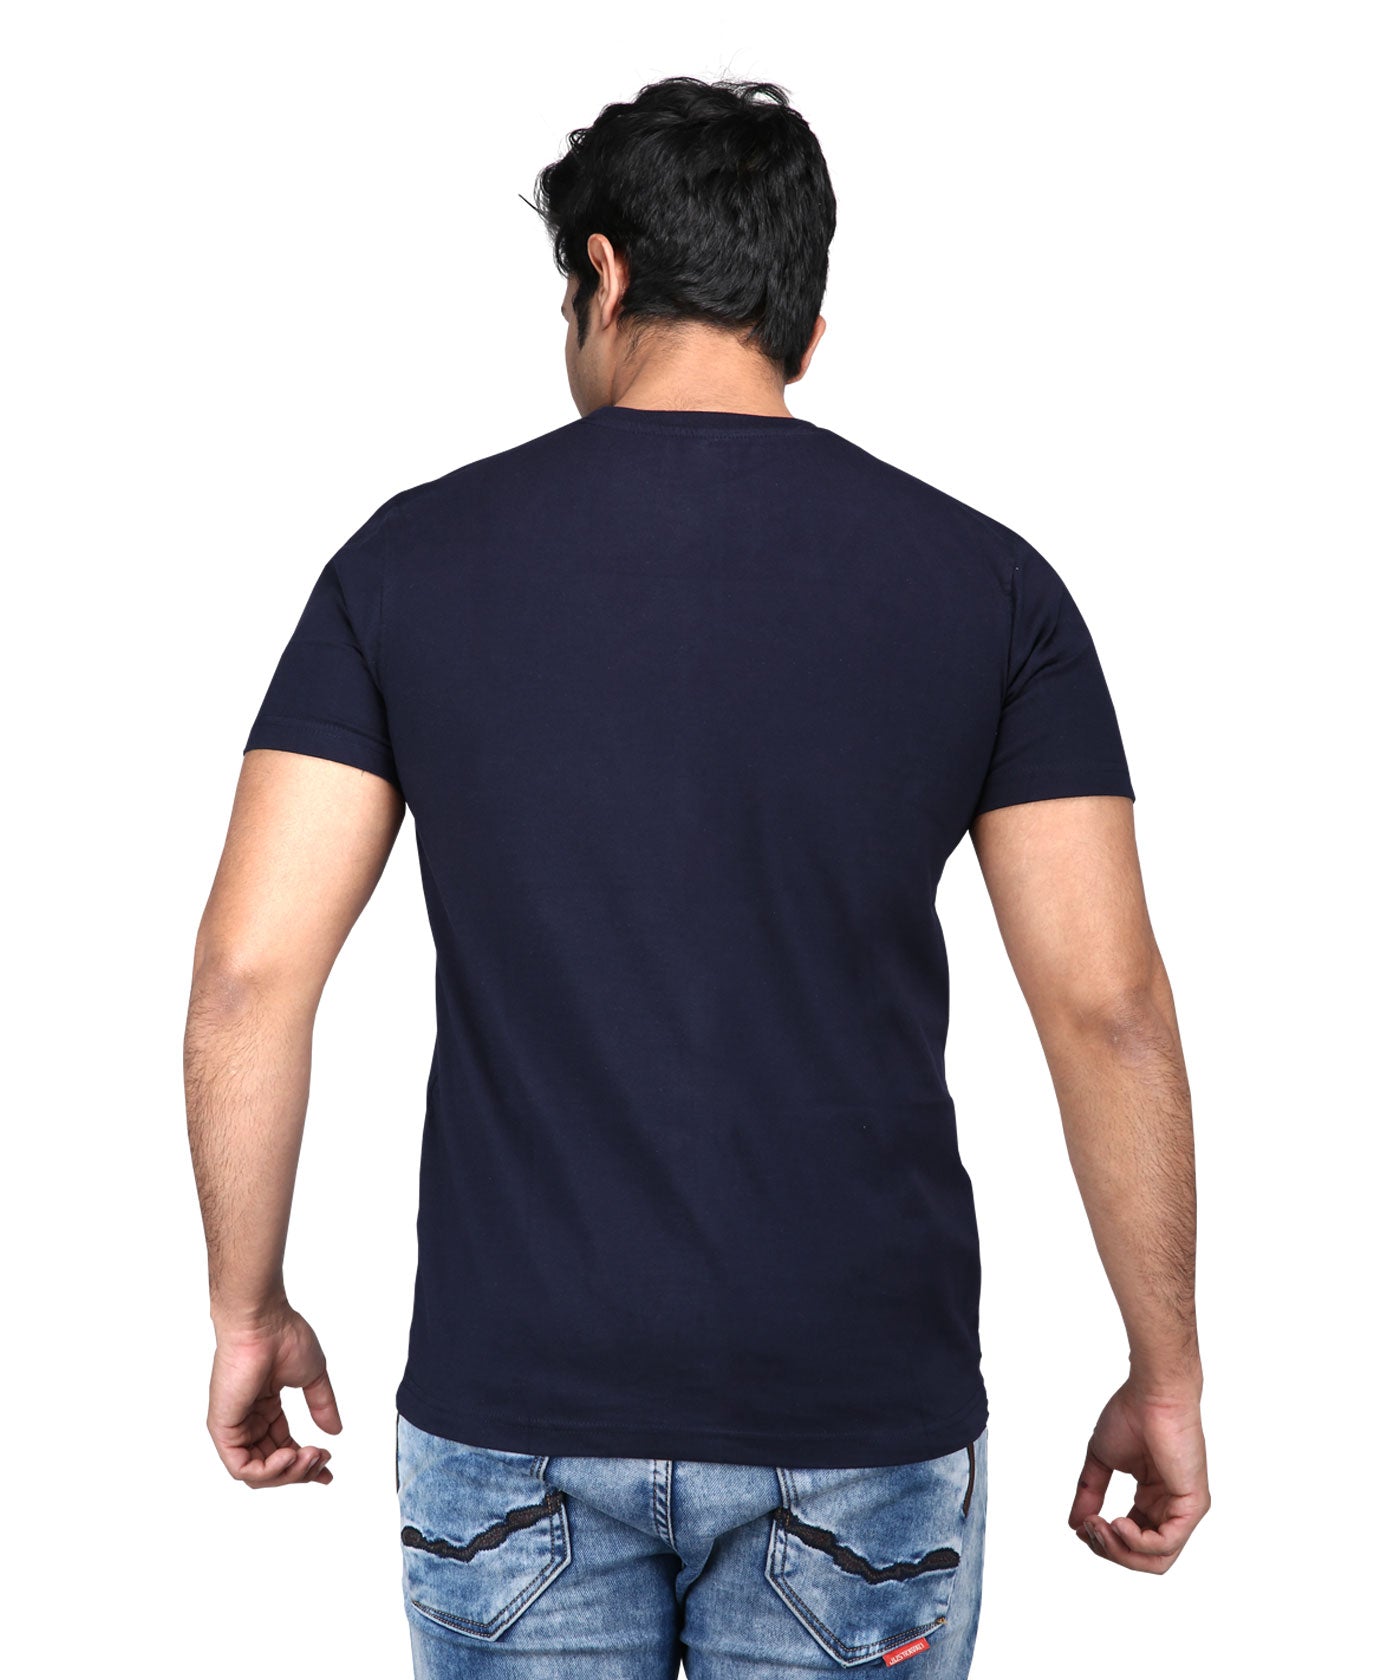 Square Ganesha - Premium Round Neck Cotton Tees for Men - Navy Blue